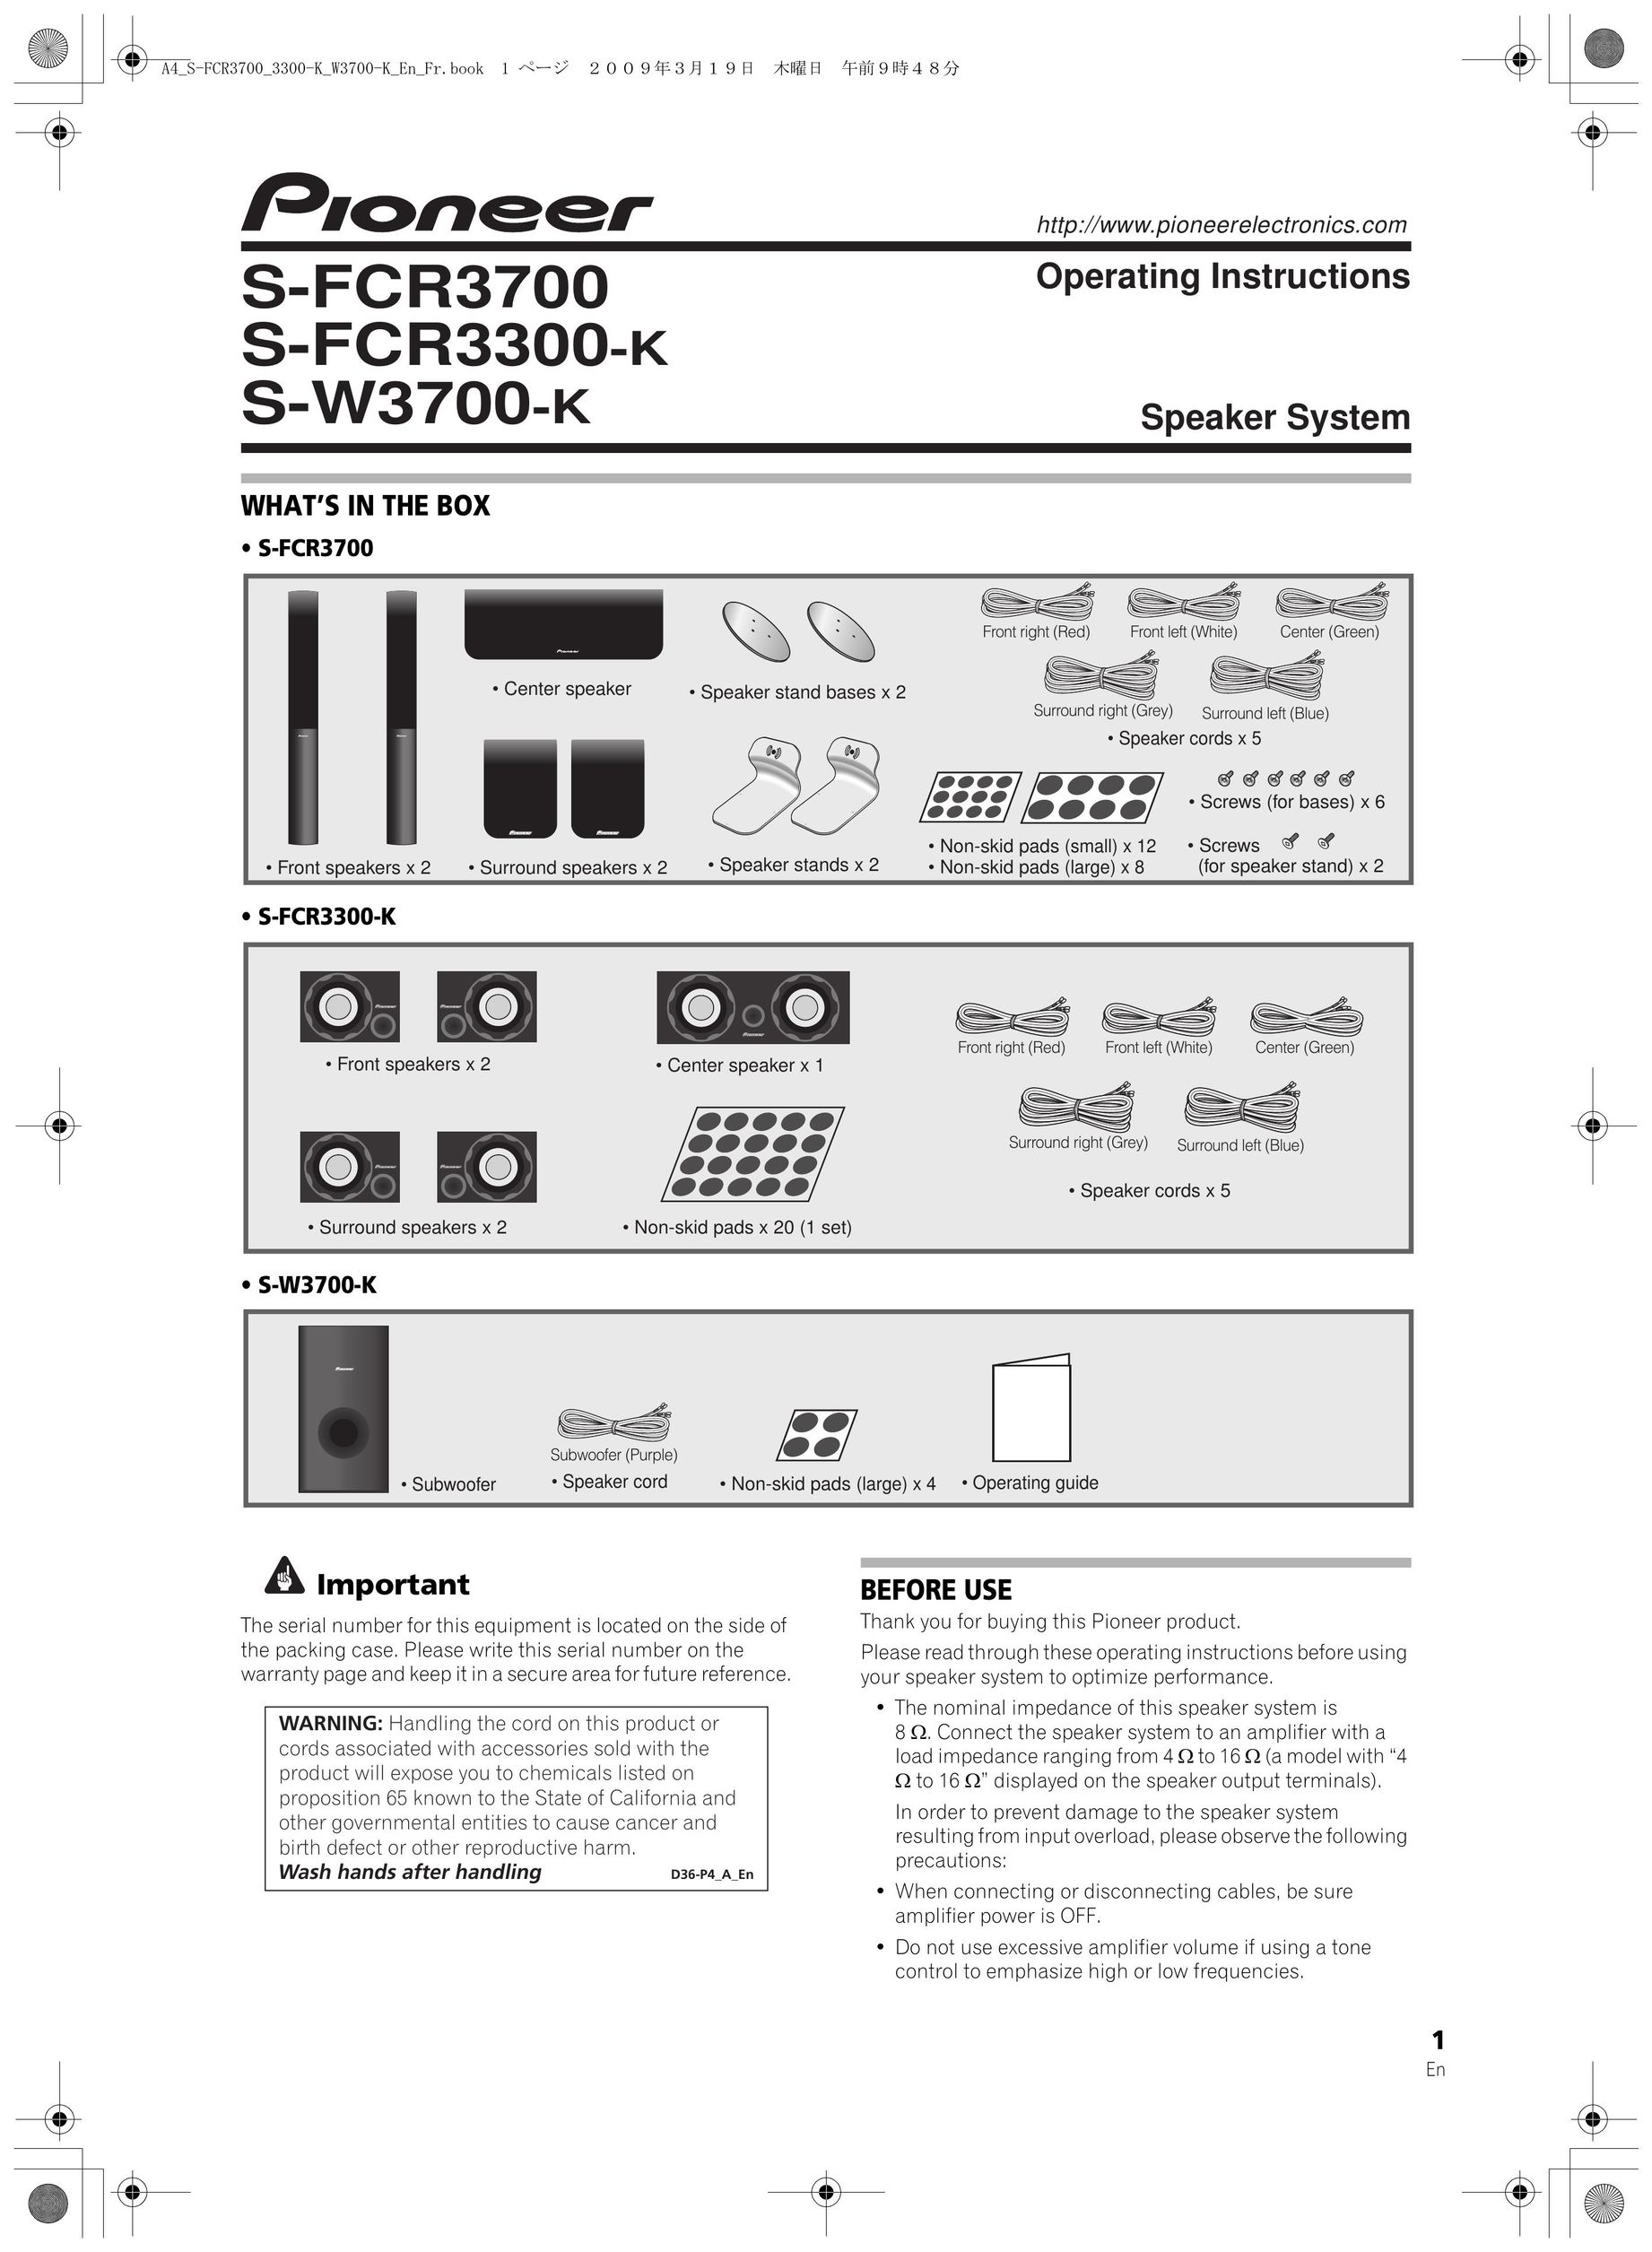 Pioneer S-W3700-K Speaker System User Manual